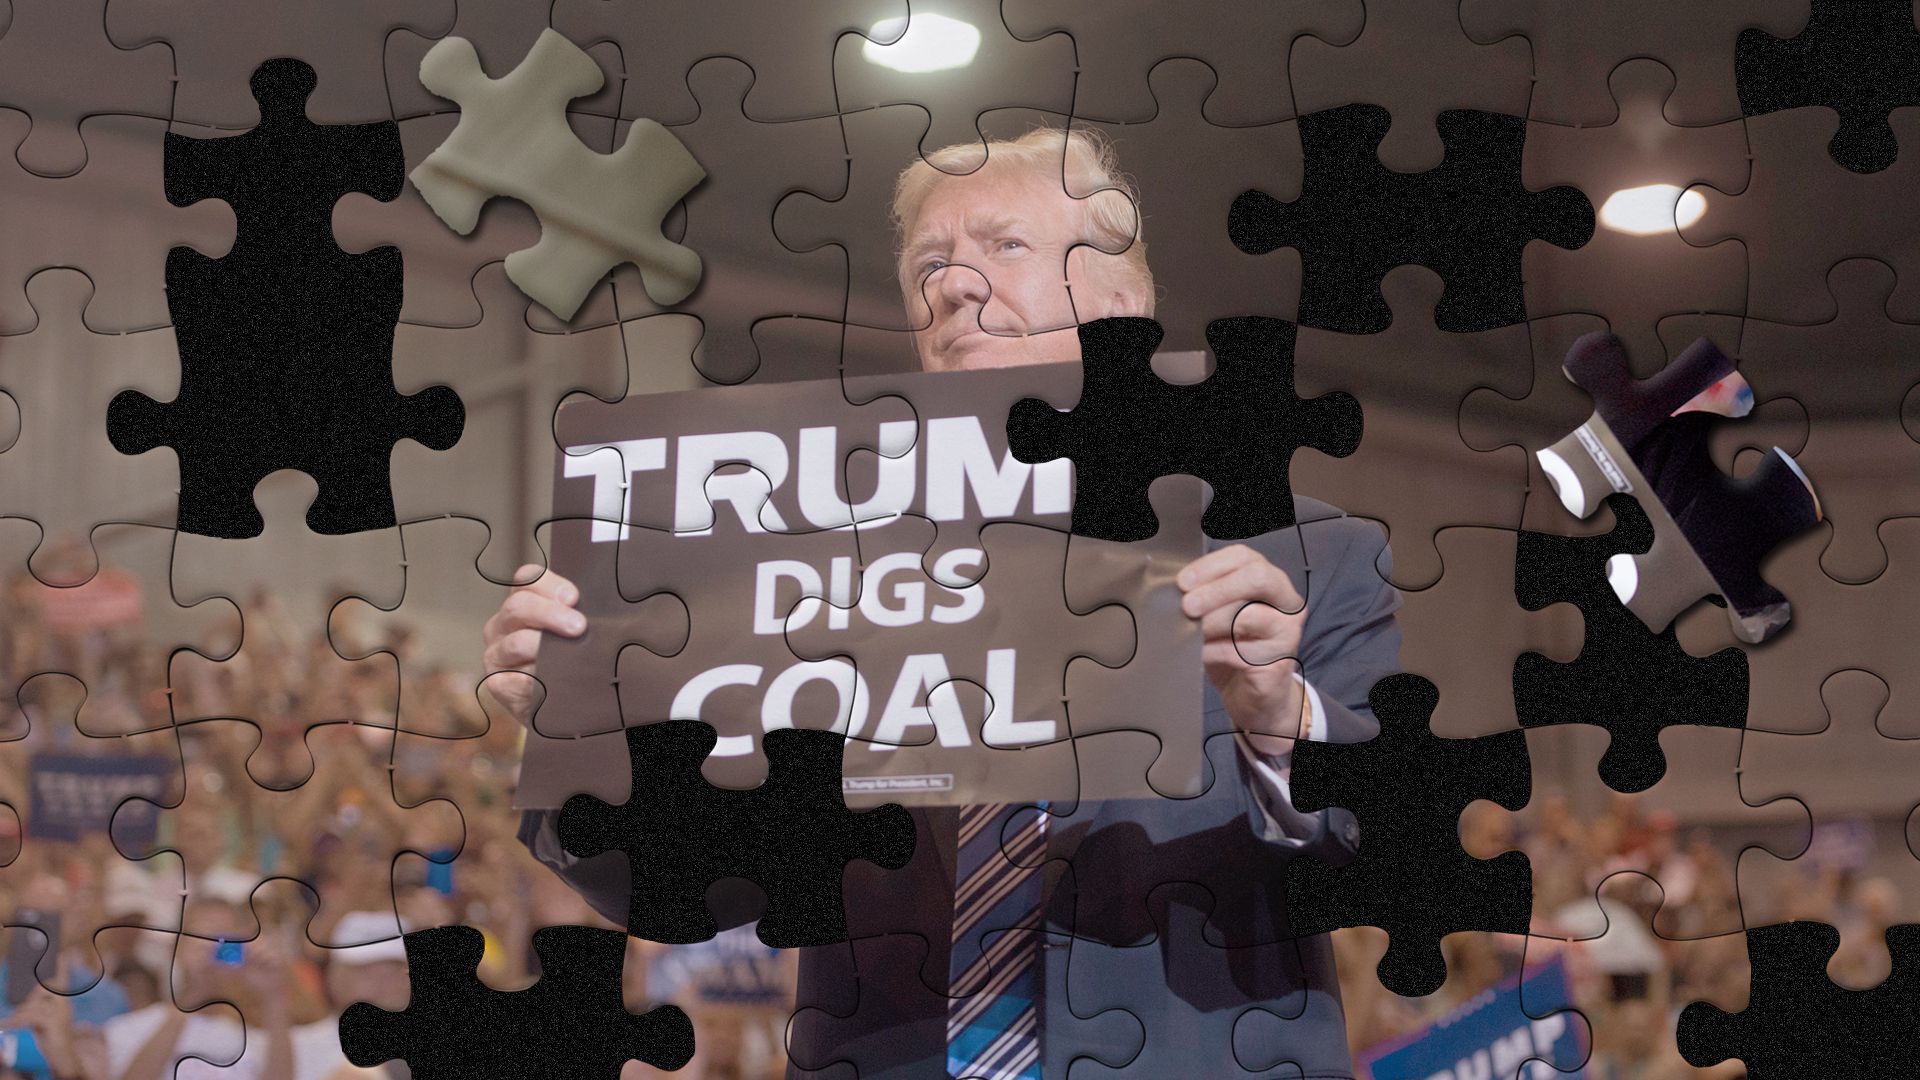 Illustration of donald trump holding a "trump digs coal" sign